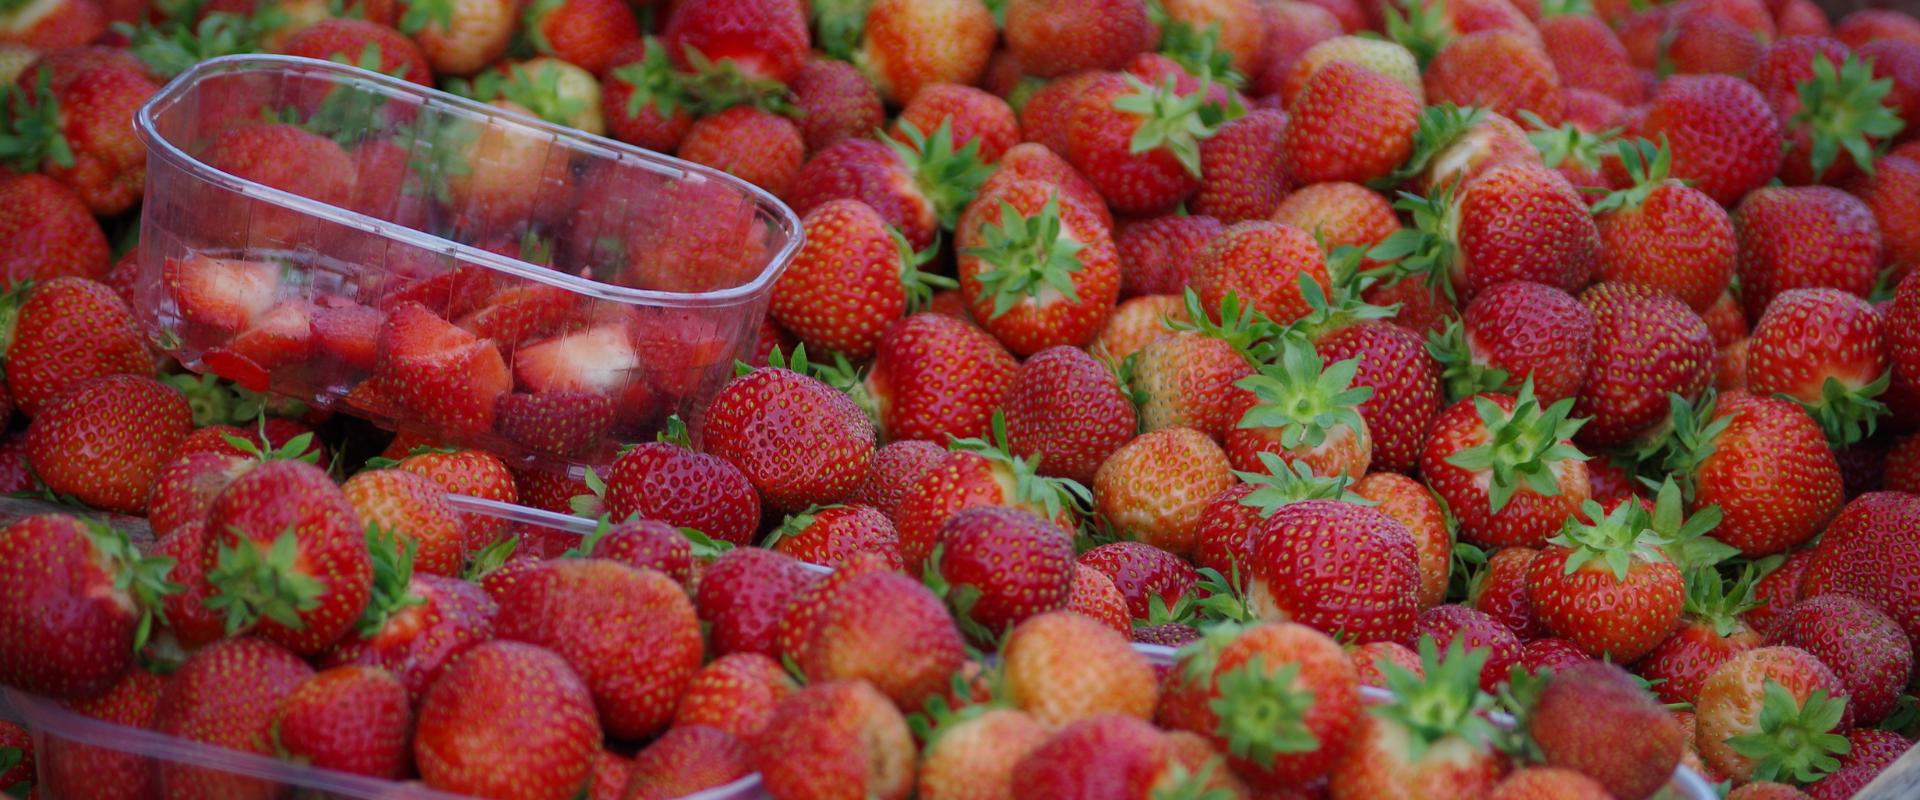 Tartu Market, strawberries